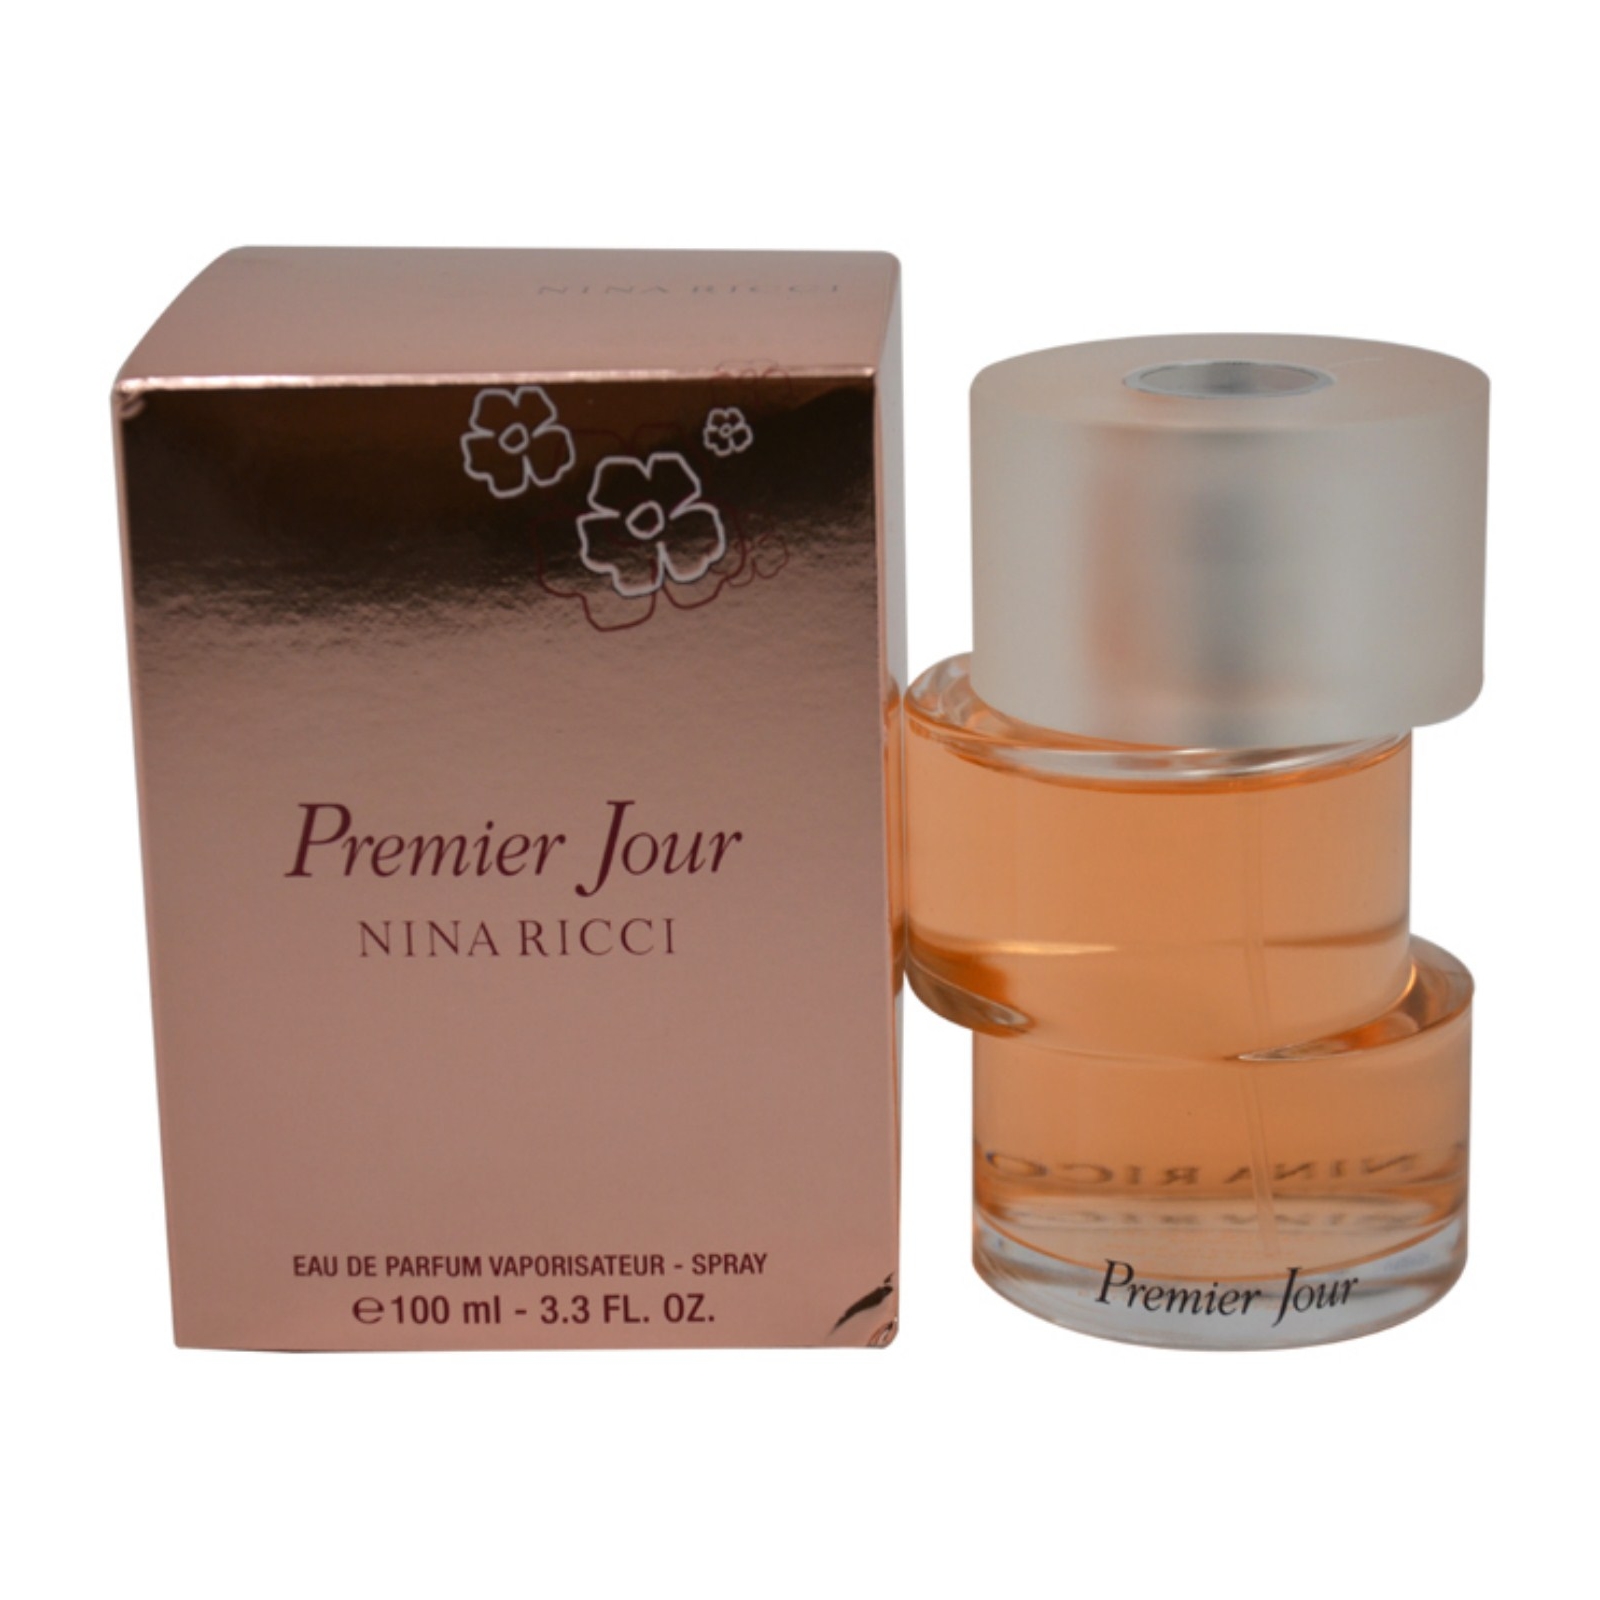 Nina Ricci Premier Jour by  for Women - 3.3 oz EDP Spray